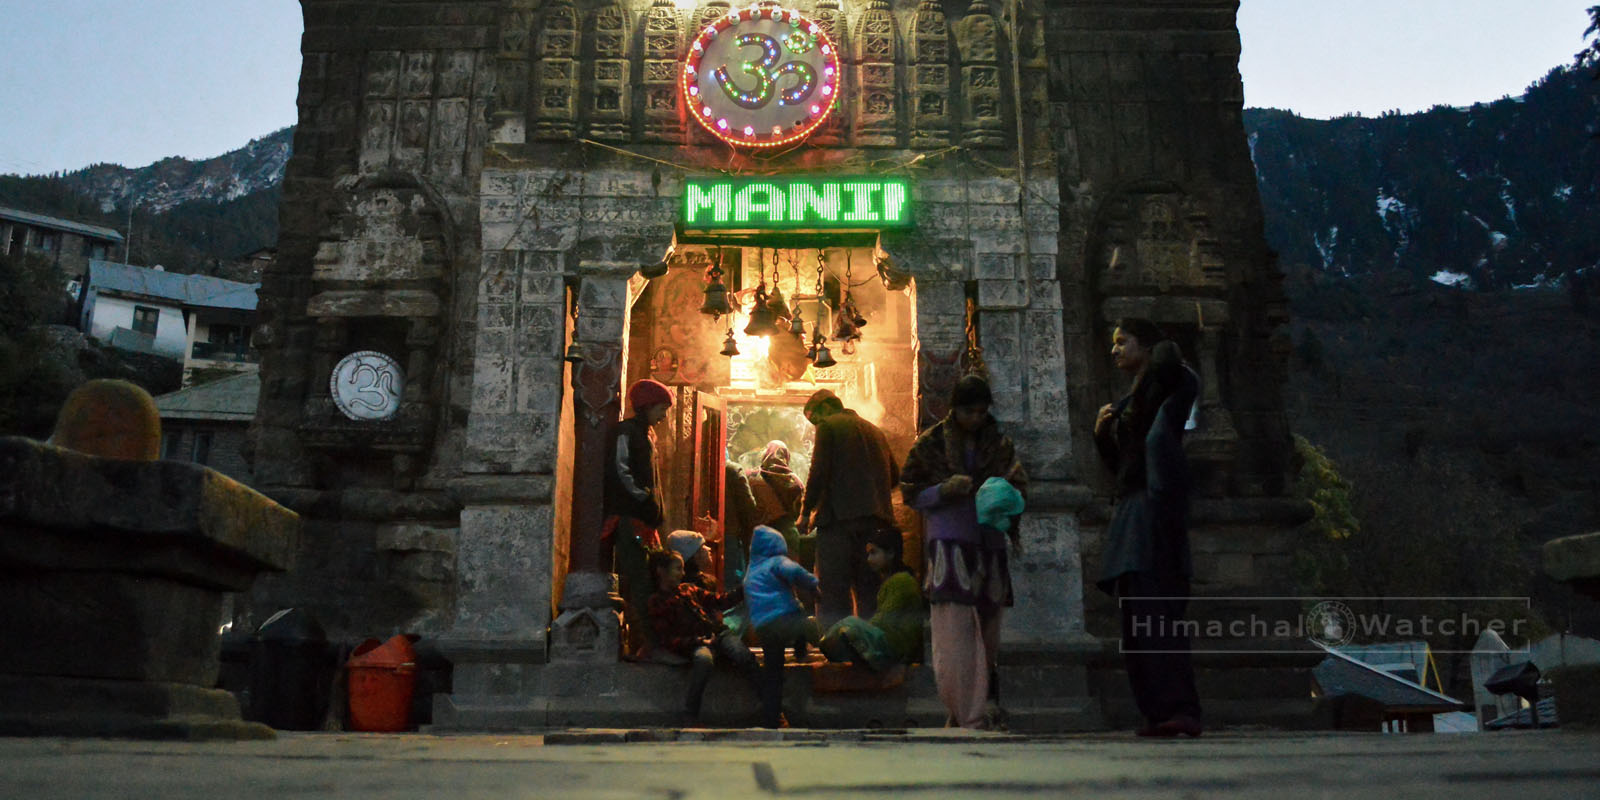 temples opening in himachal pradesh